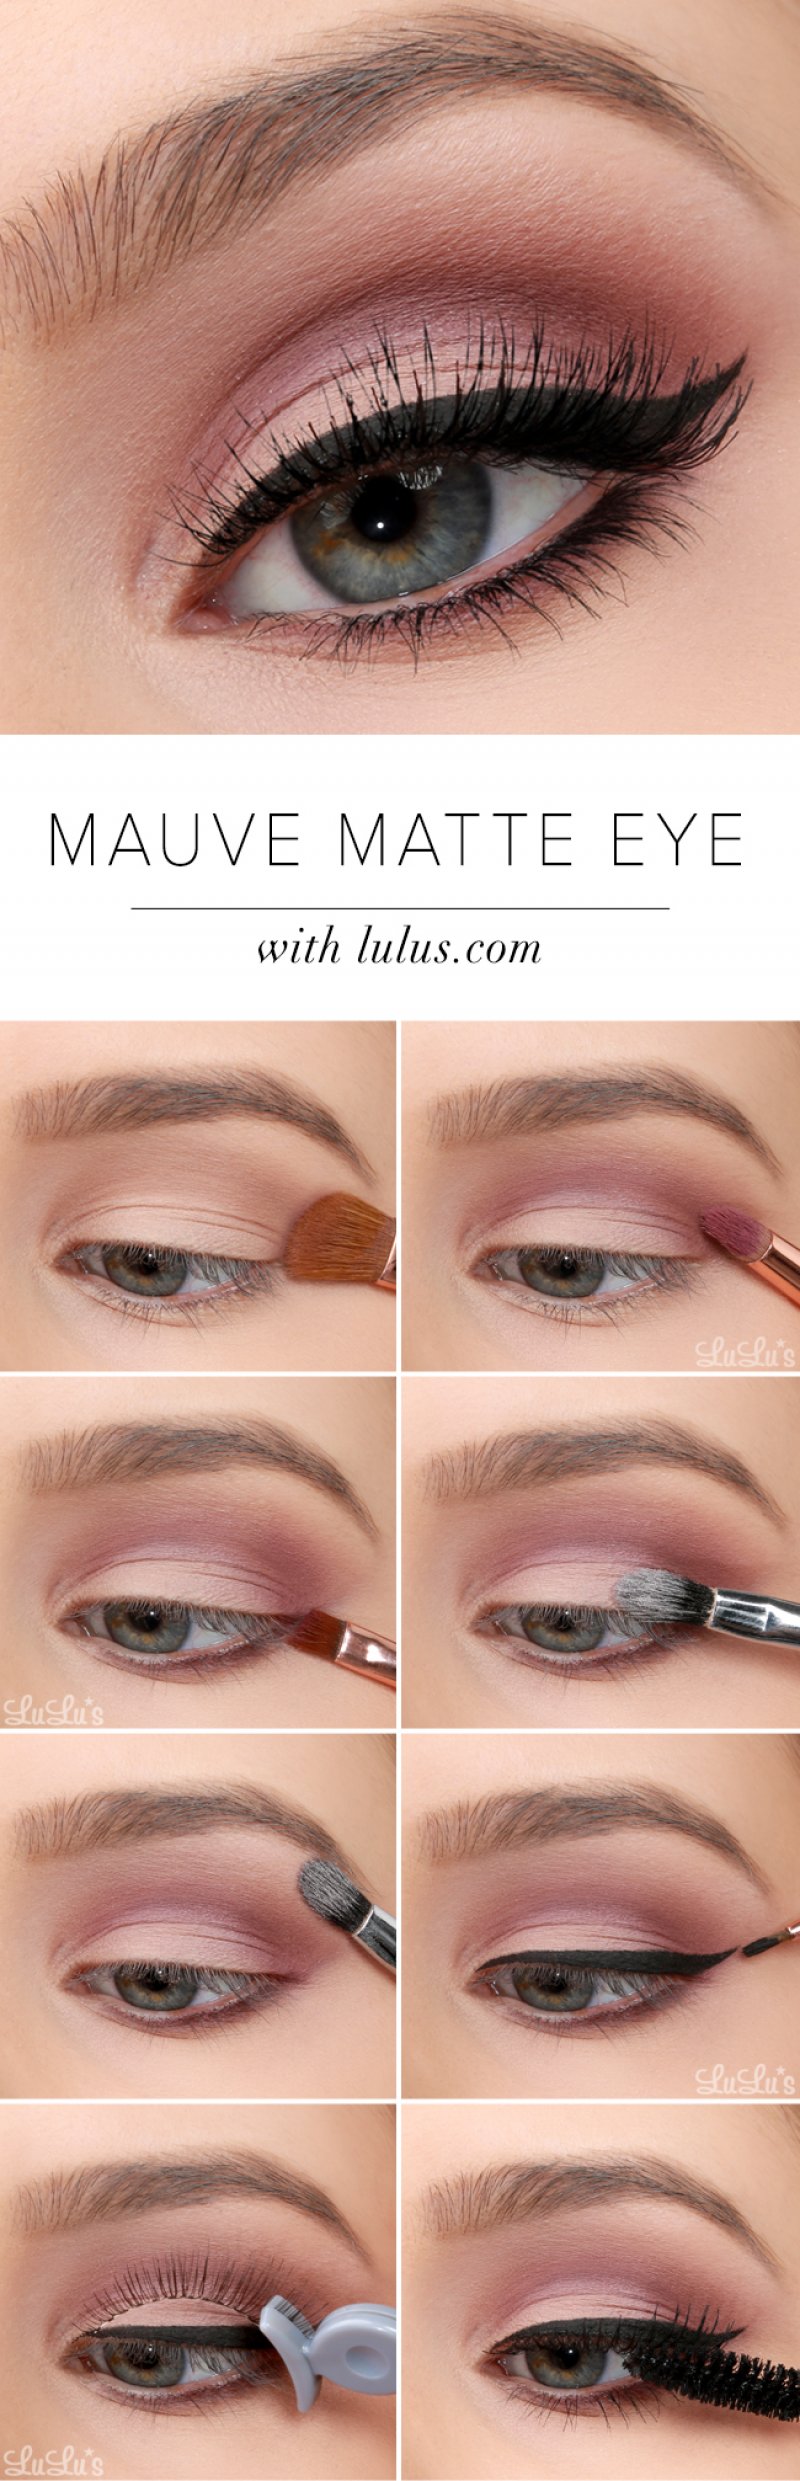 Mauve Matte Eye Tutorial.